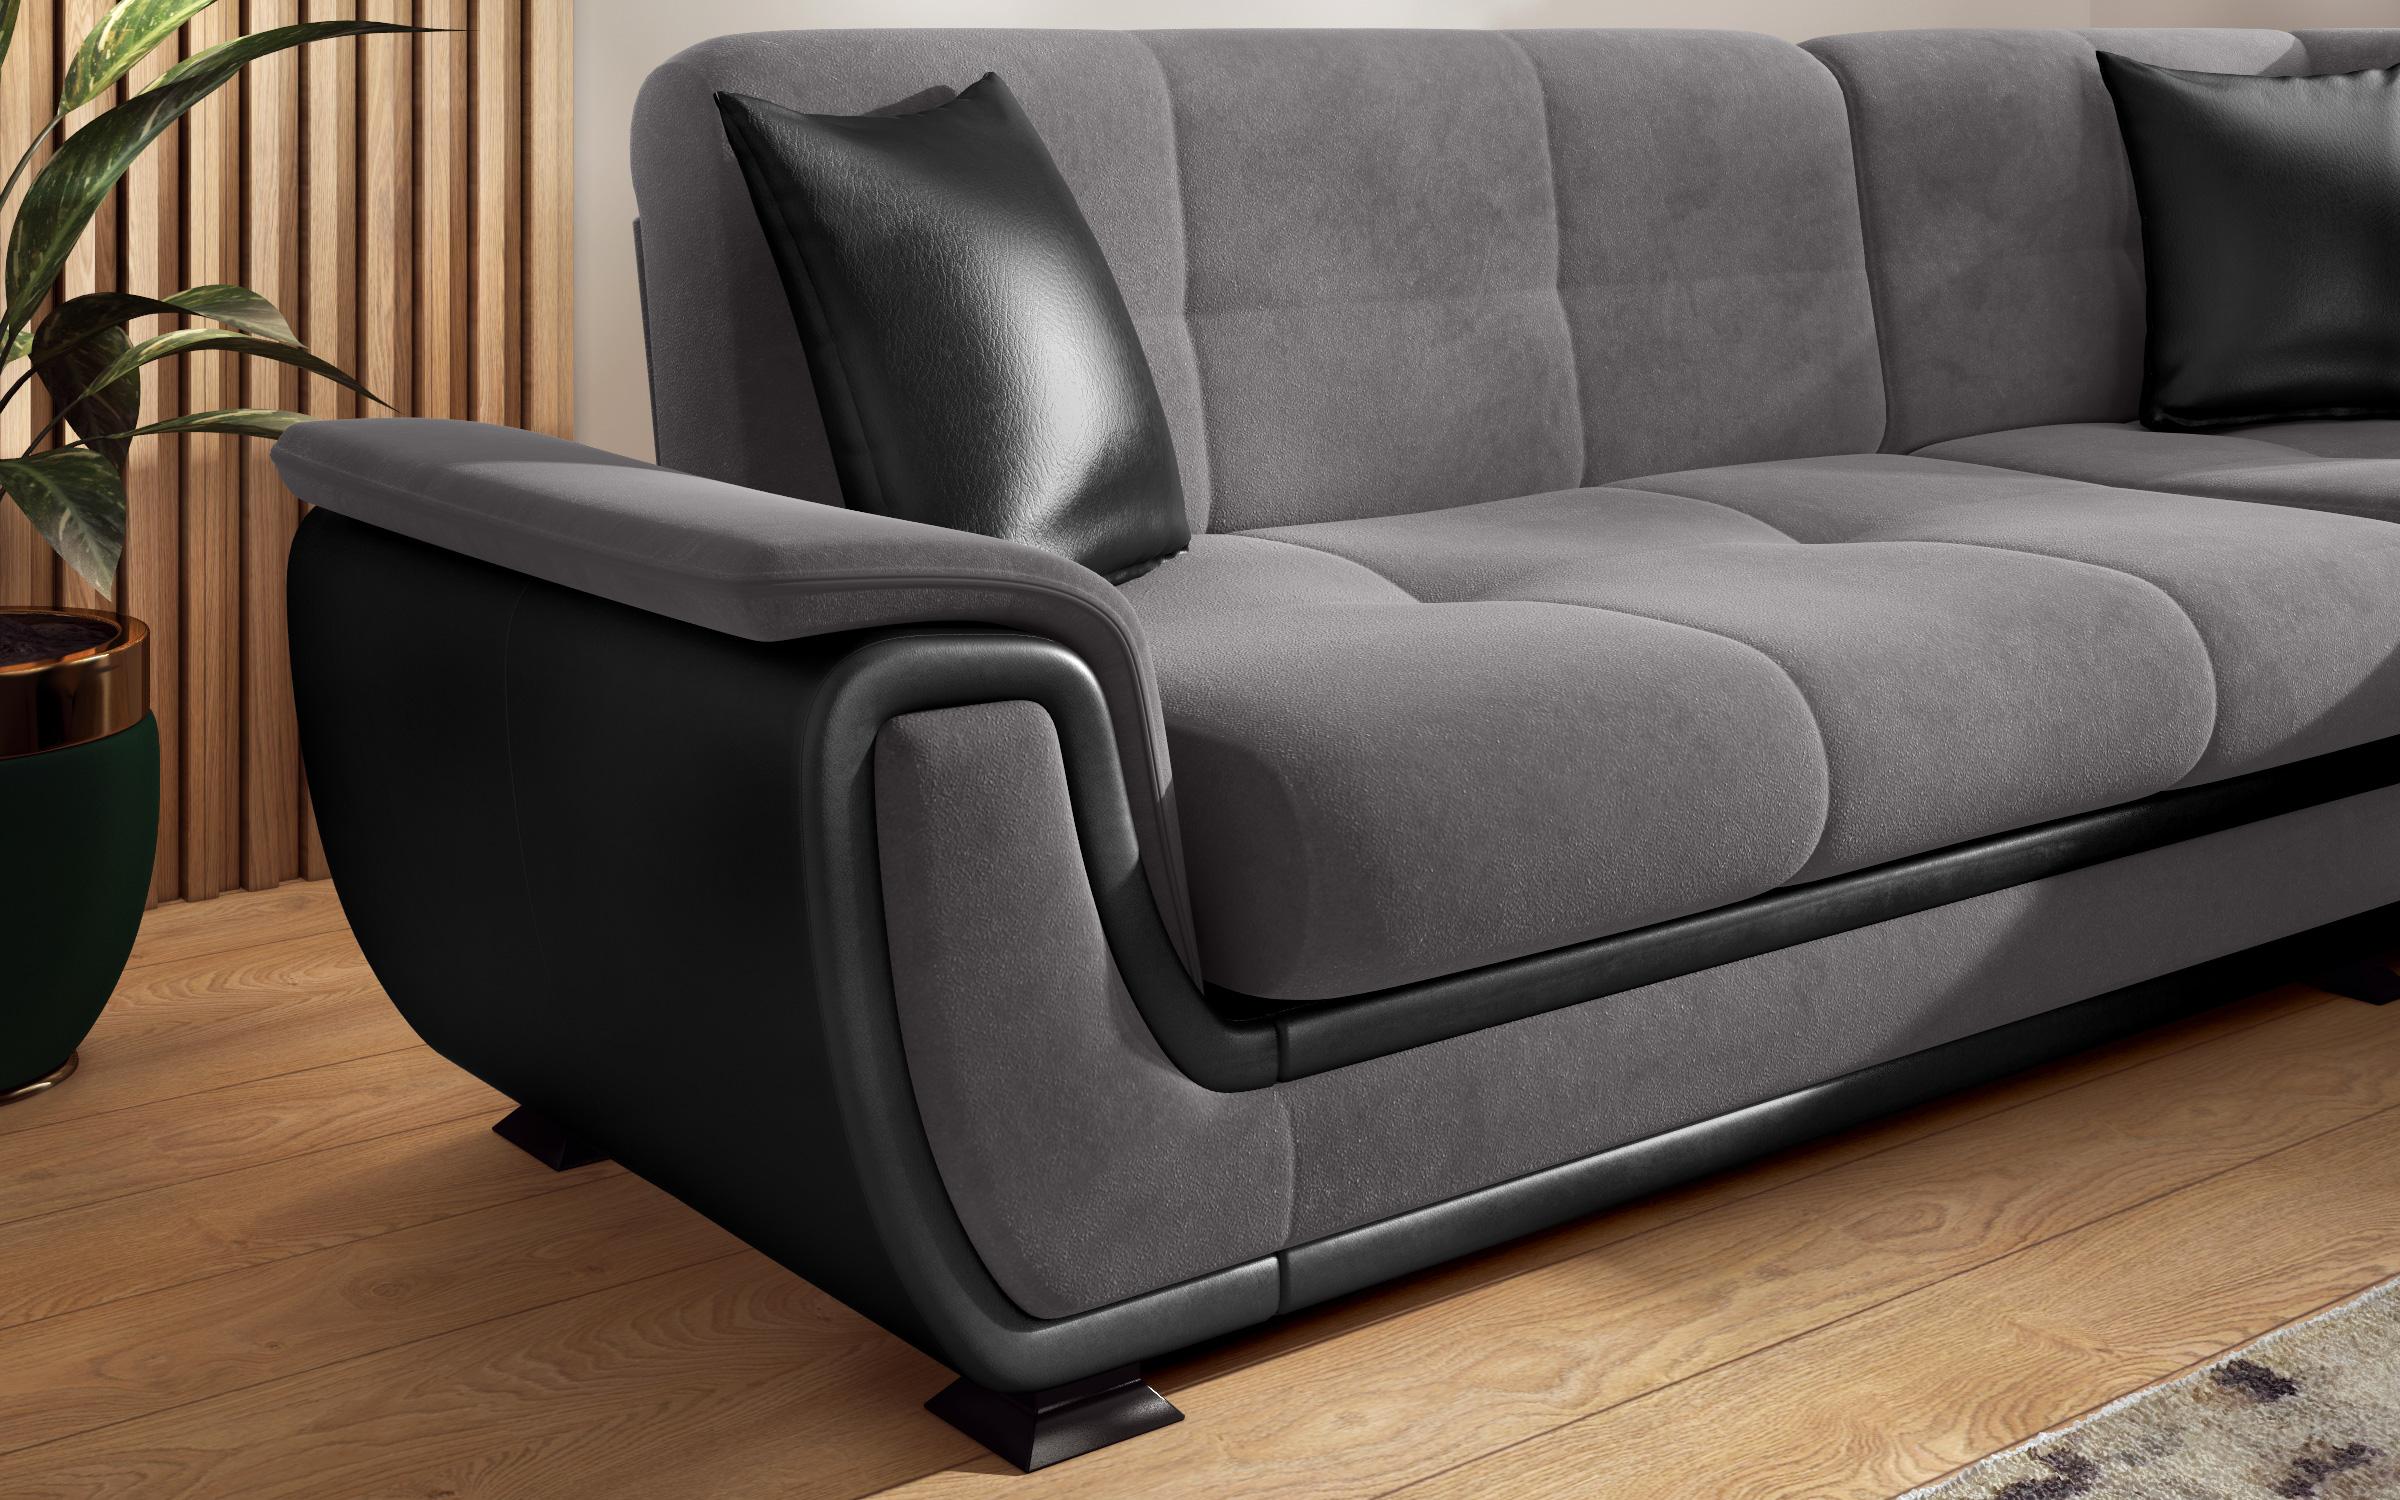 Kλικ - κλακ καναπές Princess II S + μηχανισμός, γκρι + μαύρο δέρμα  3